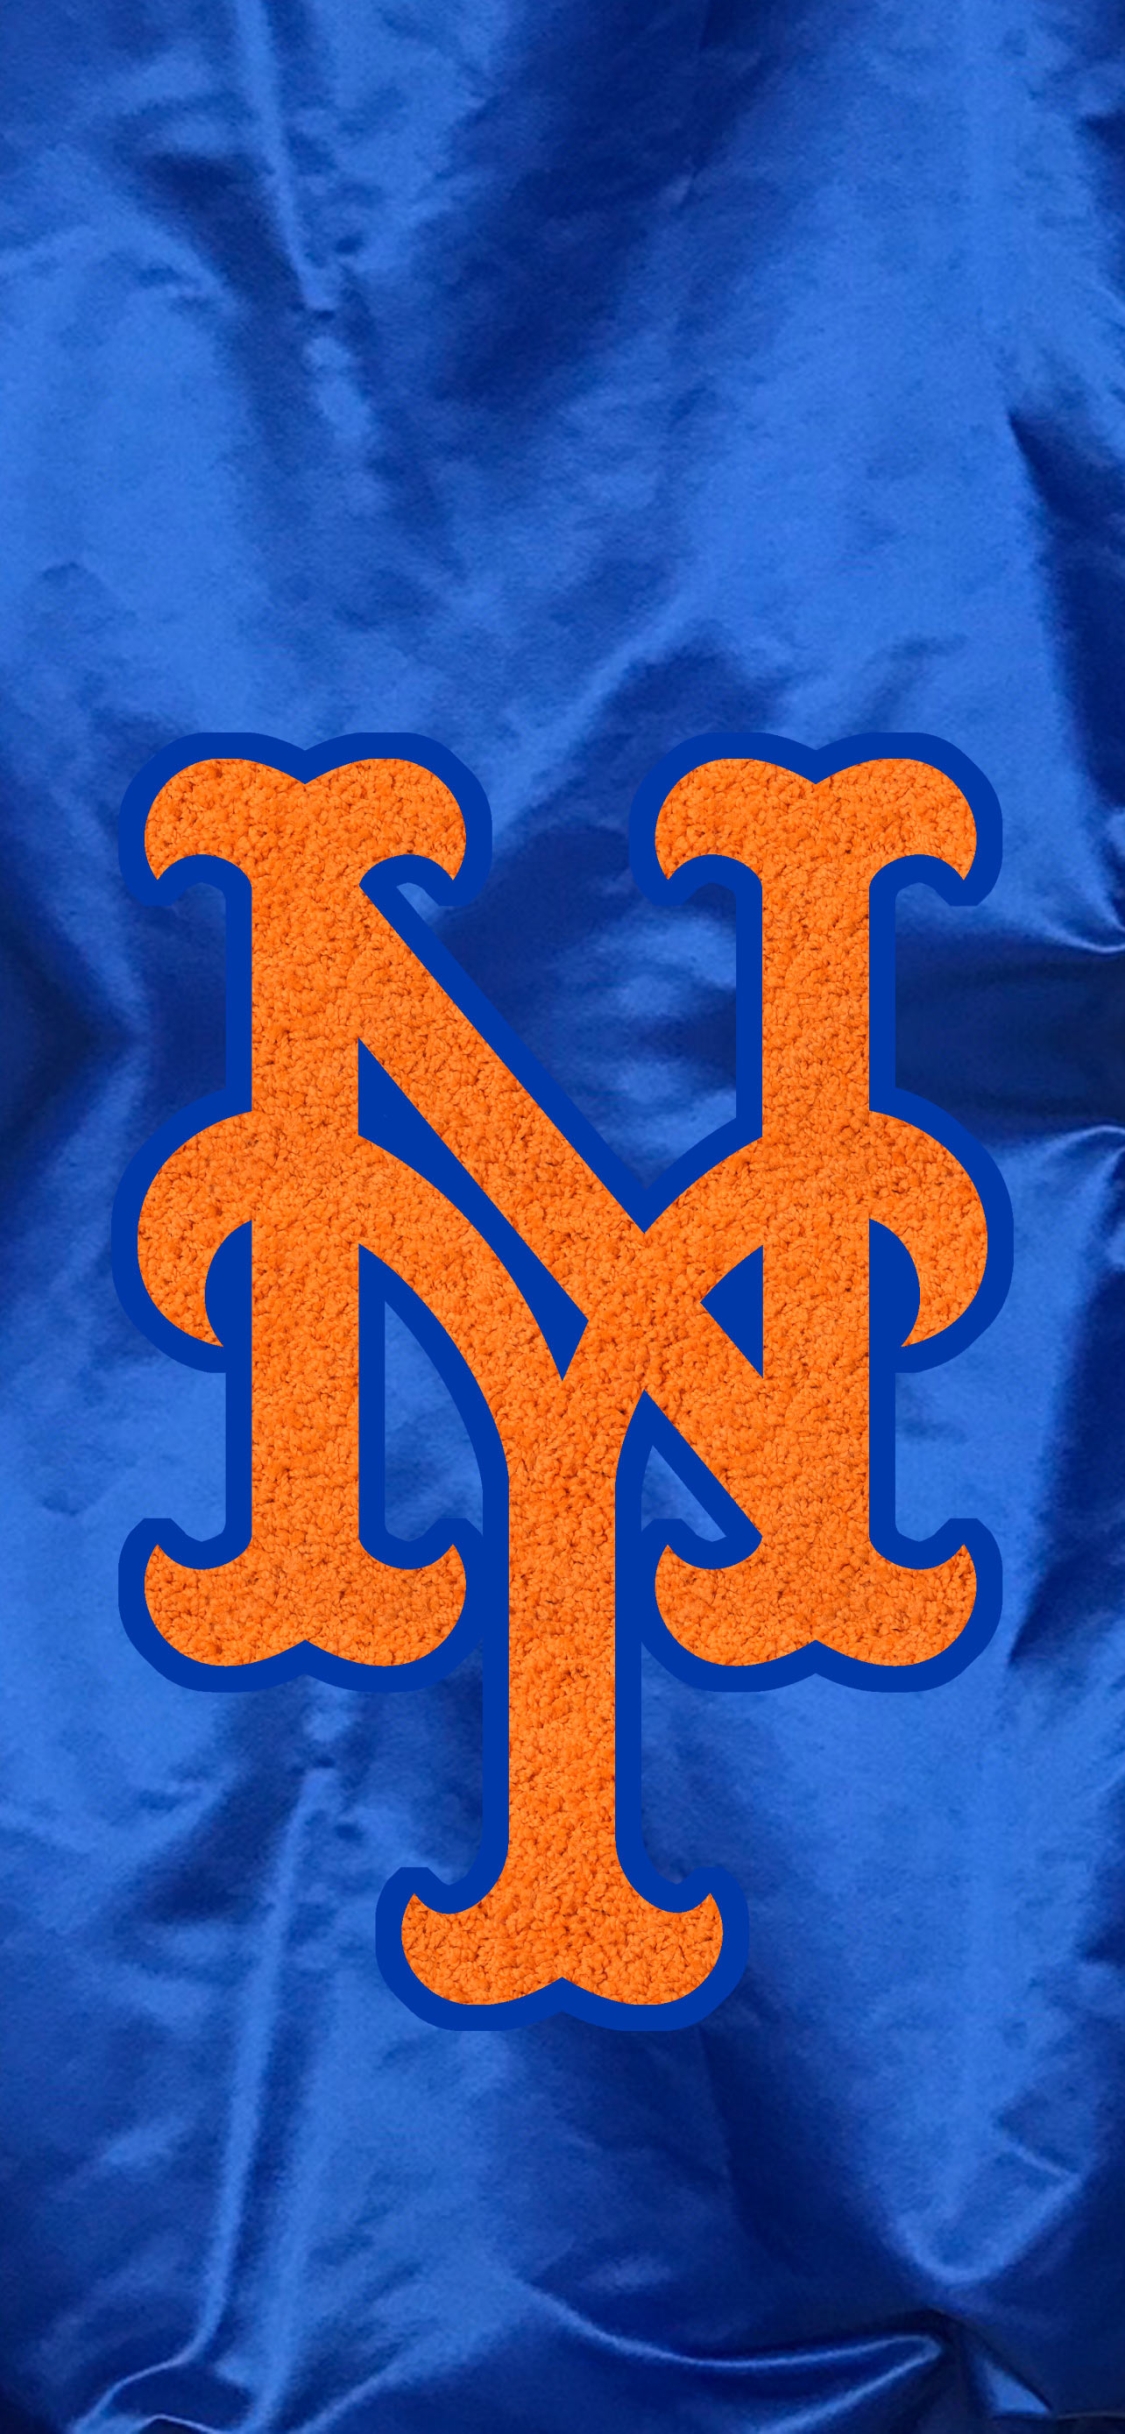 NEW YORK METS baseball mlb 3 wallpaper  3161x2635  232313  WallpaperUP